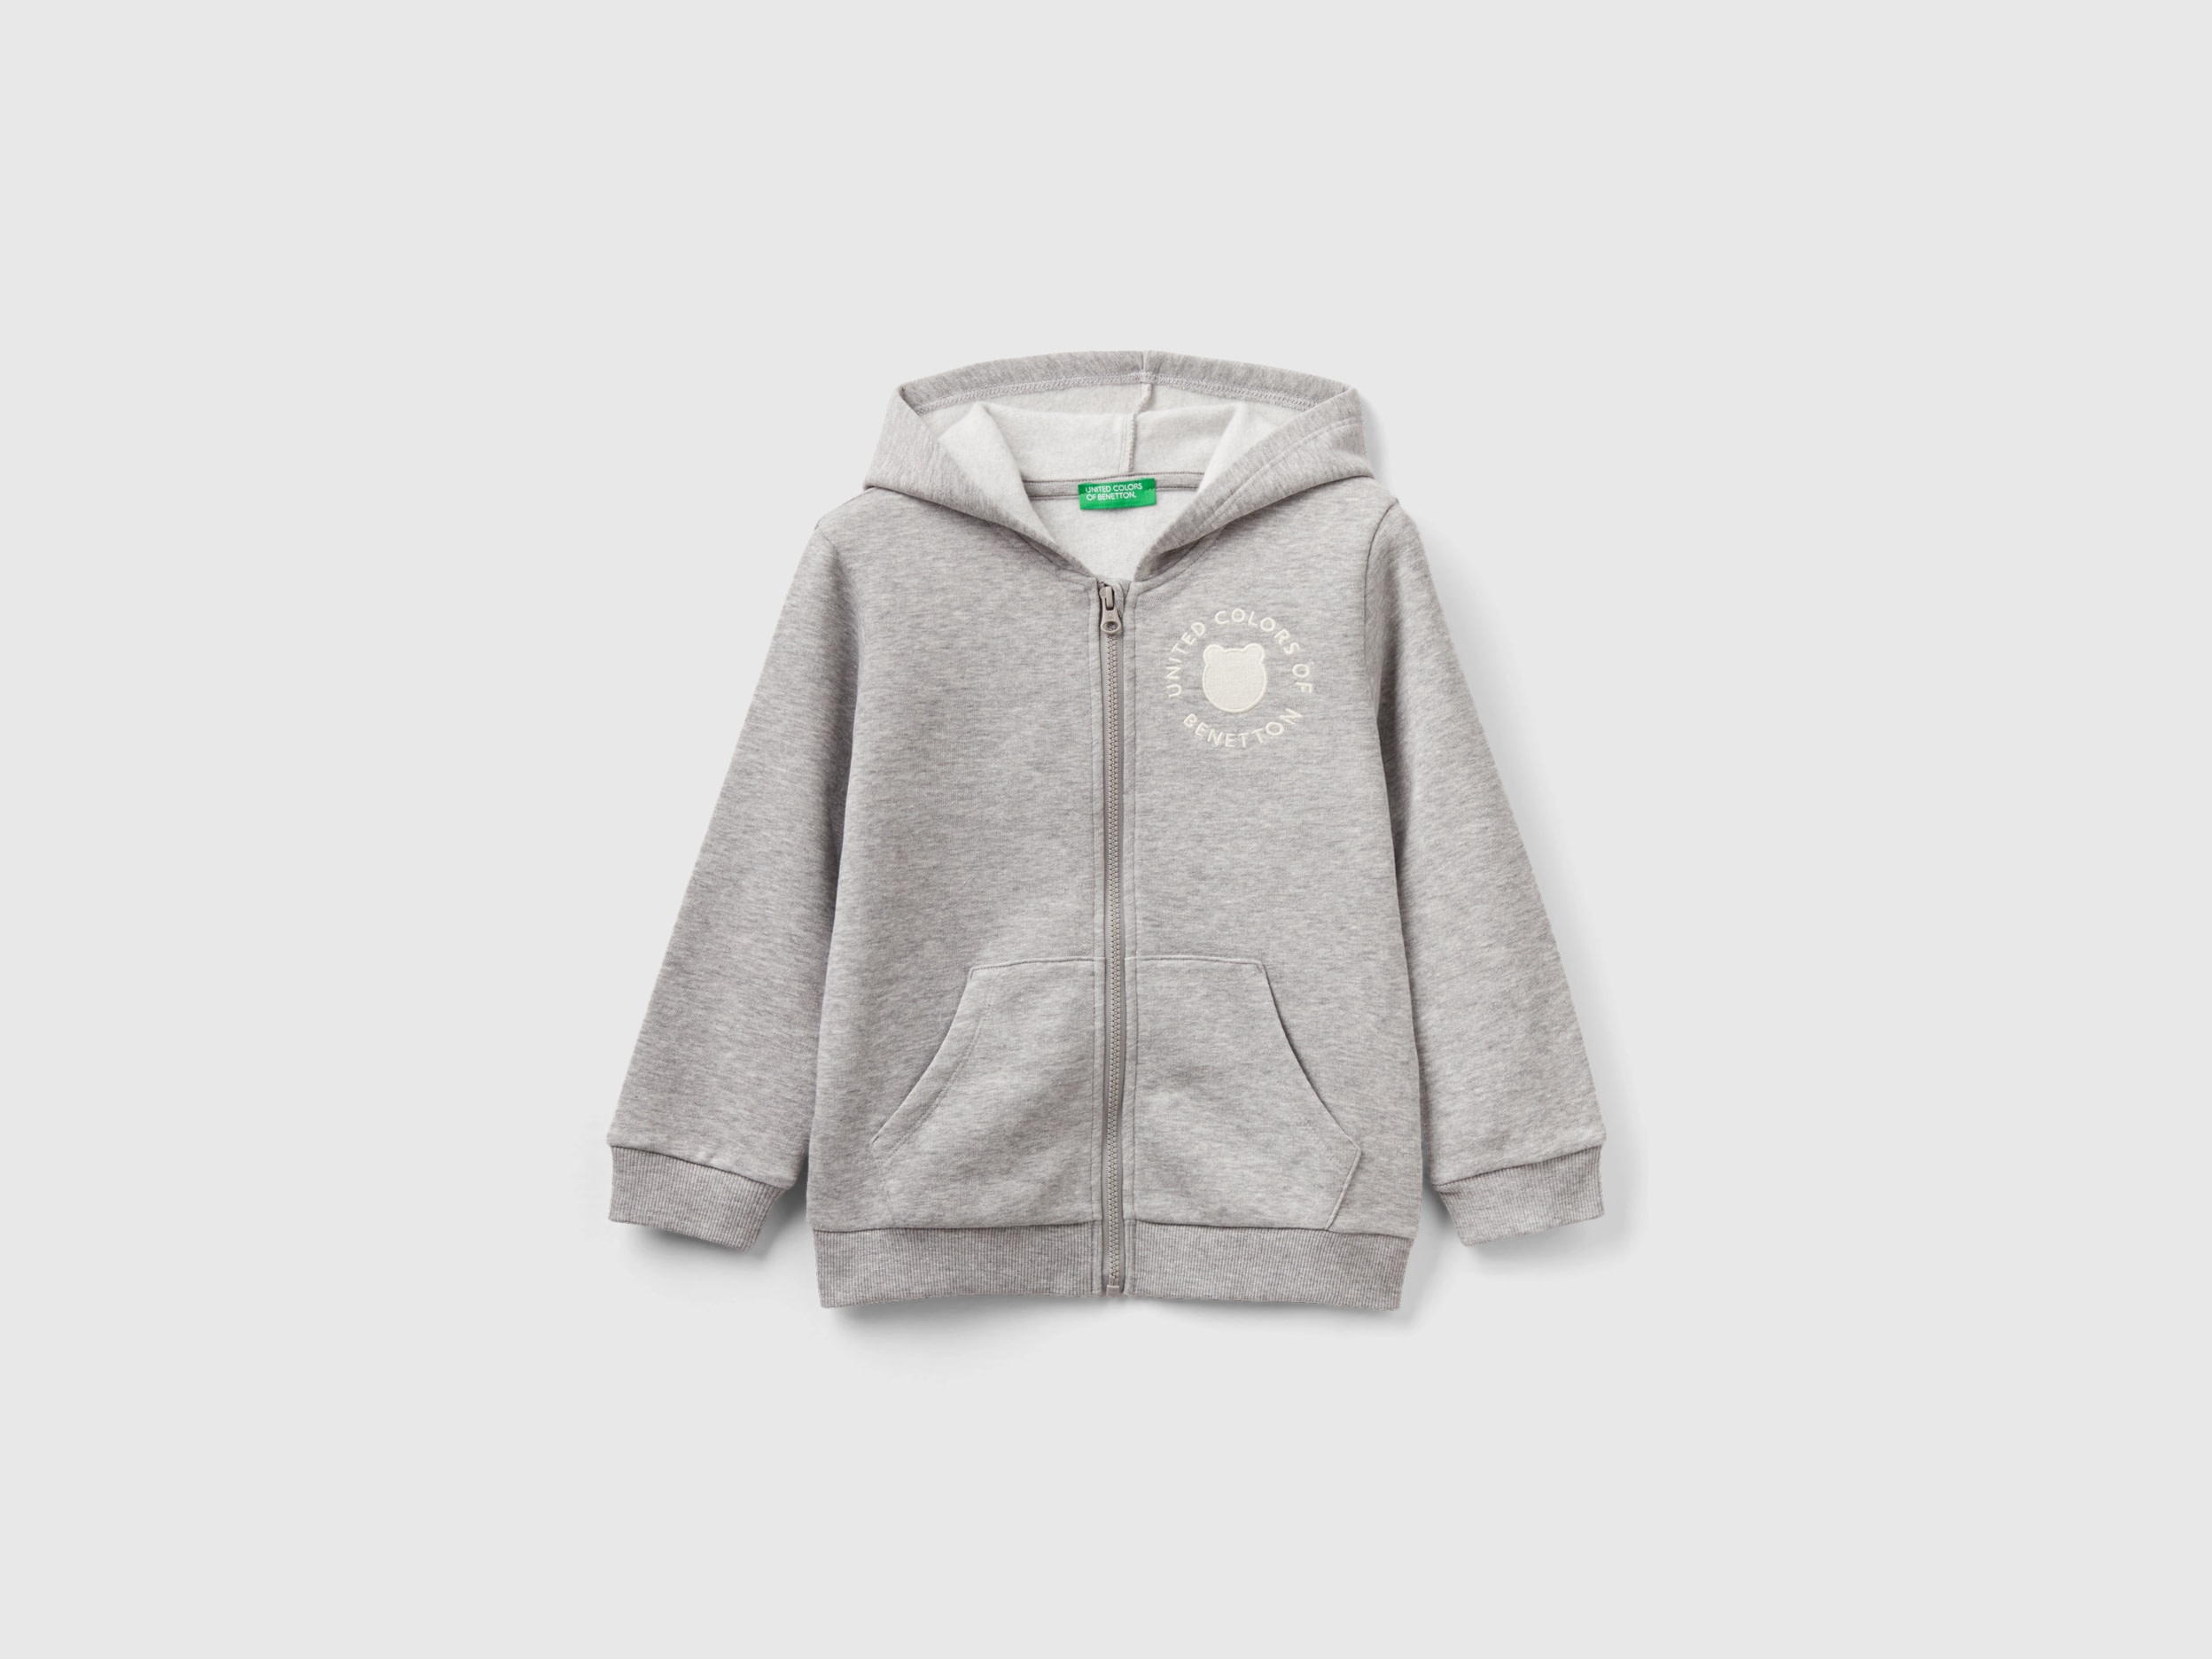 Benetton, Zip-up Sweatshirt In Cotton Blend, size 5-6, Light Gray, Kids